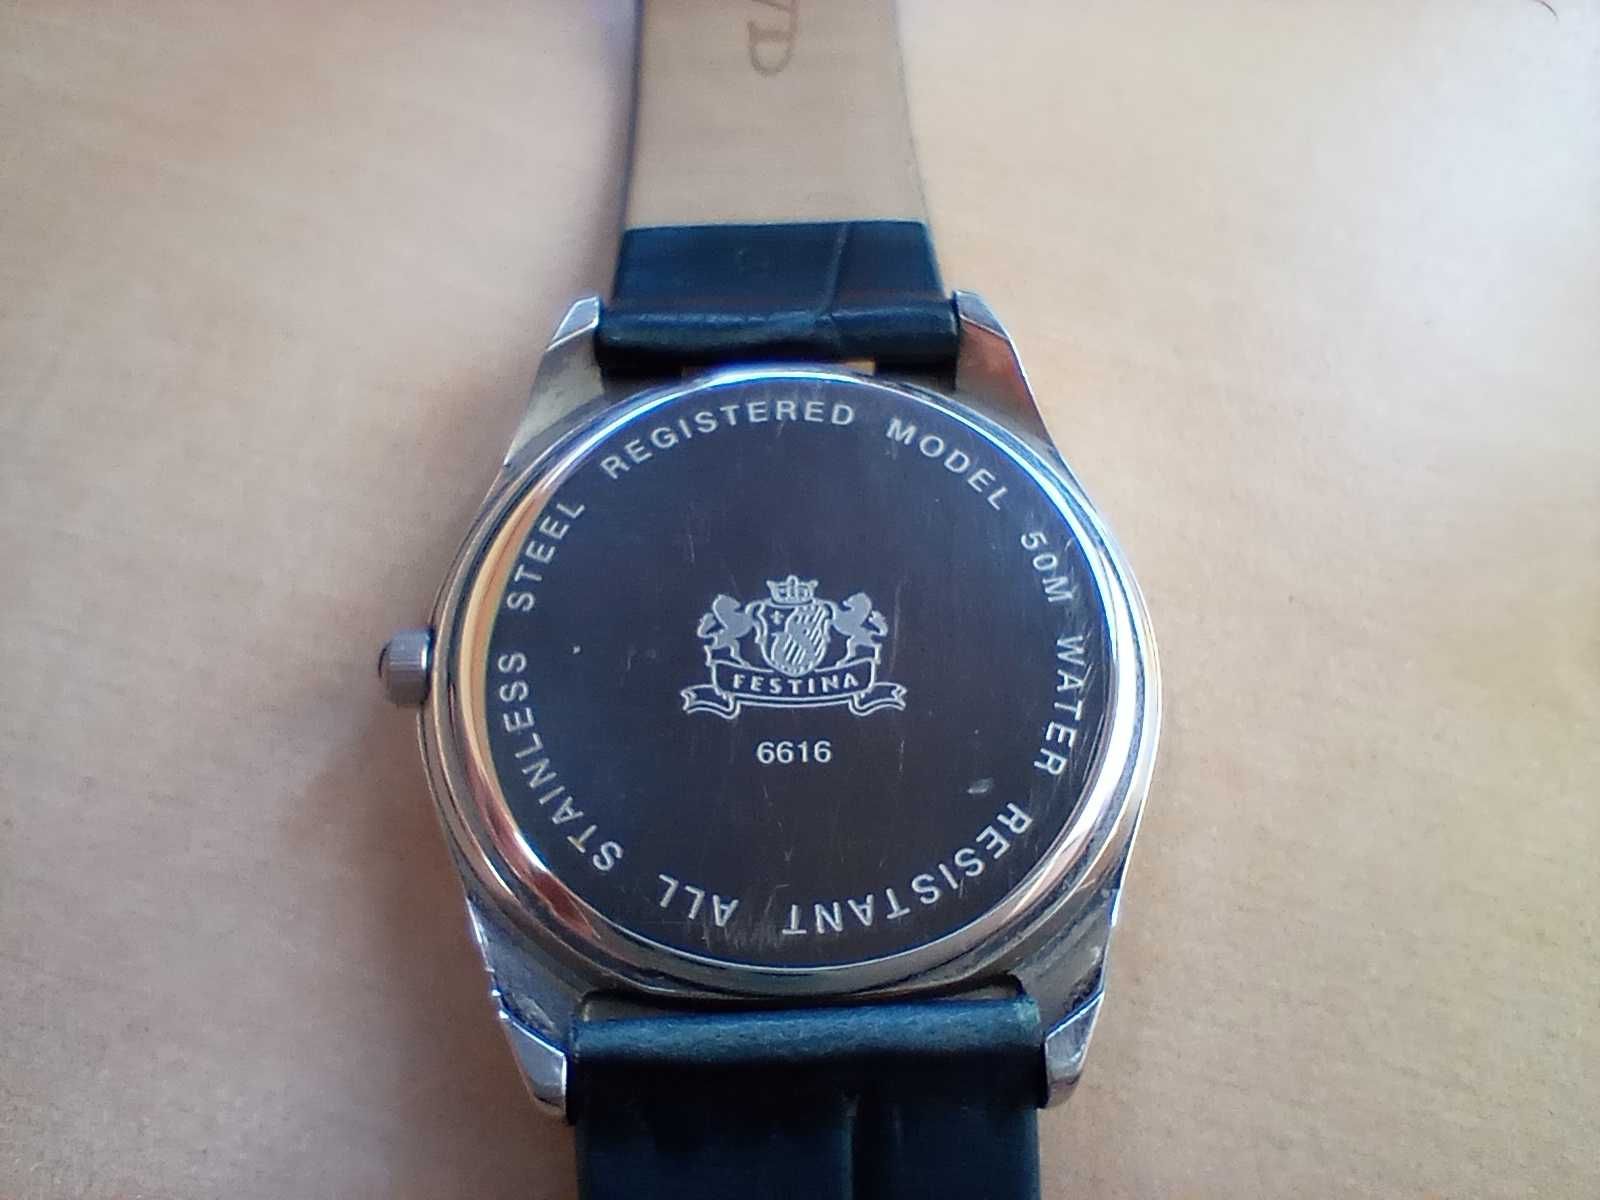 Zegarek Festina, styl klasyczny